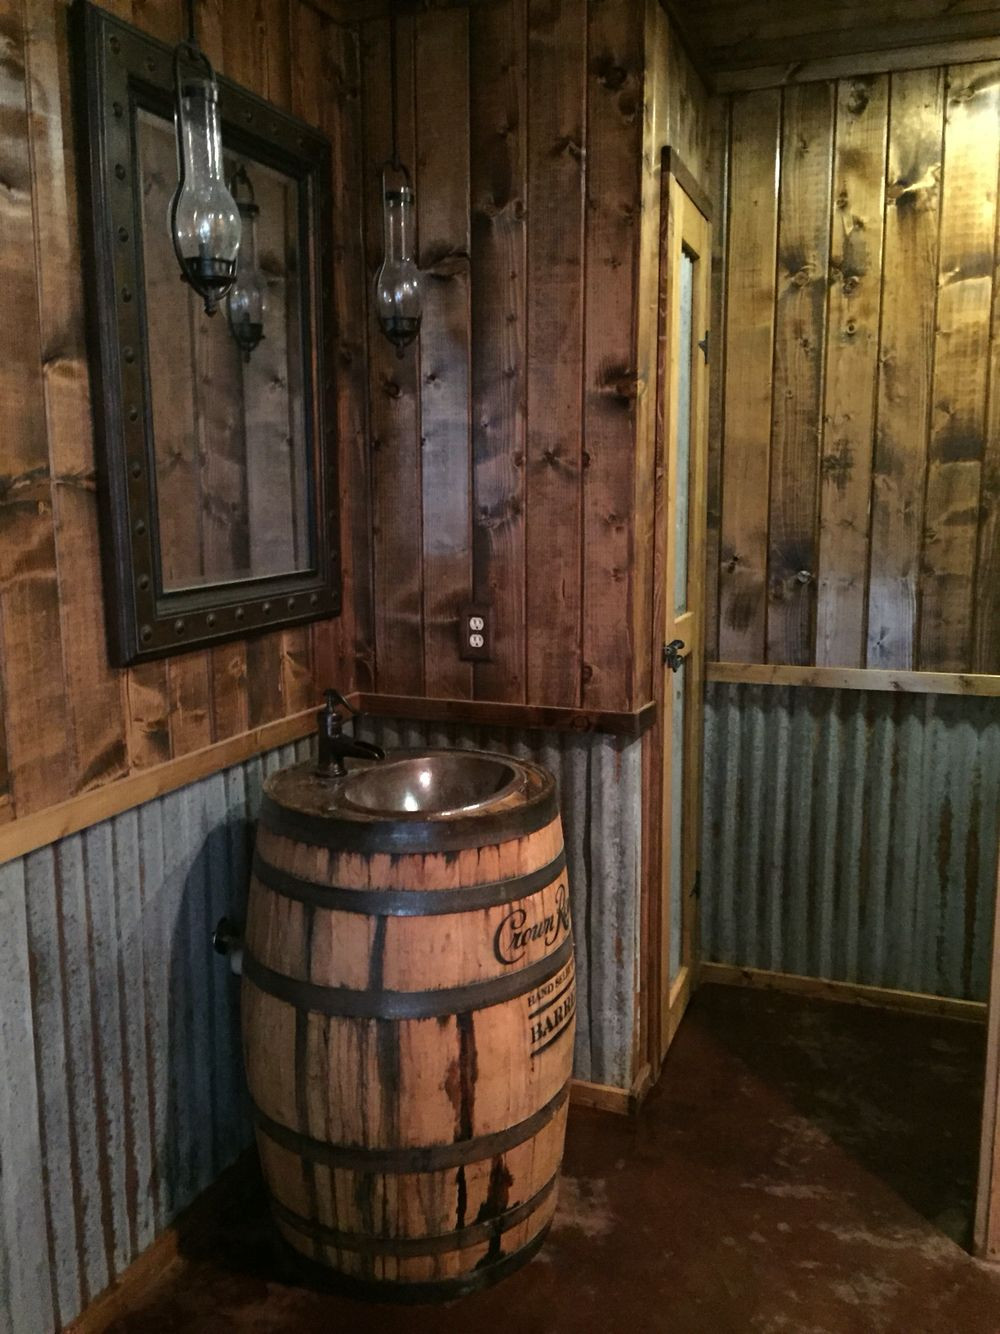 Whiskey Barrel Bathroom Vanity
 Rustic bathroom Whiskey barrel vanity Whiskey barrel